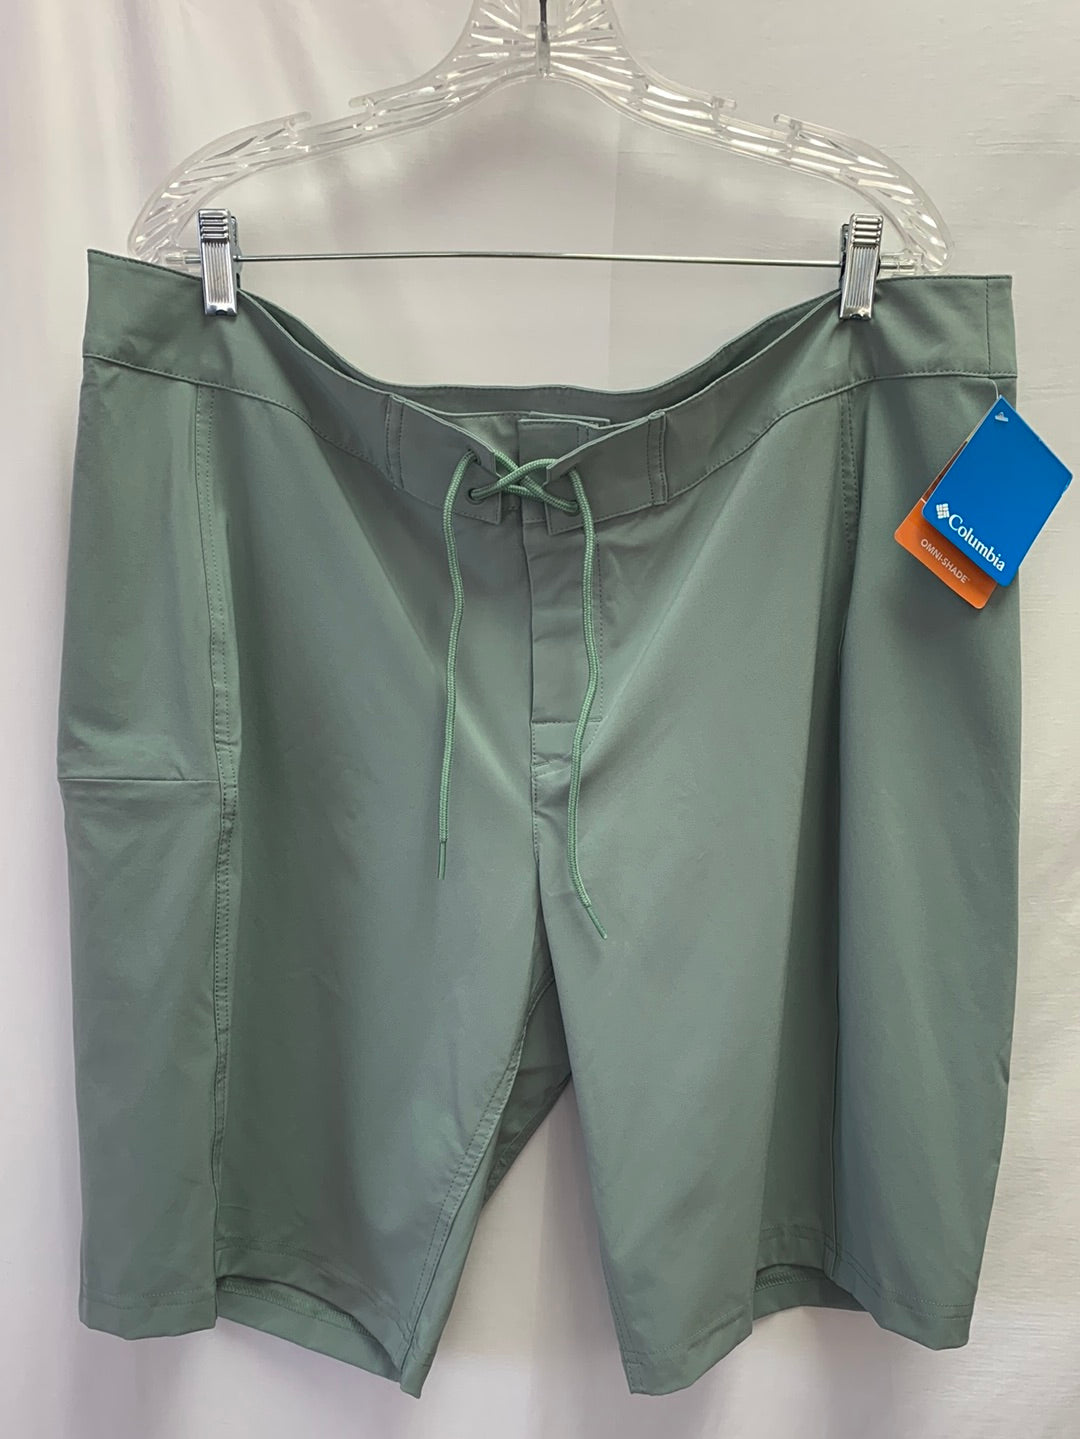 NWT - COLUMBIA blue Omni-Shade 50 UPF Pleasant Creek Board Shorts